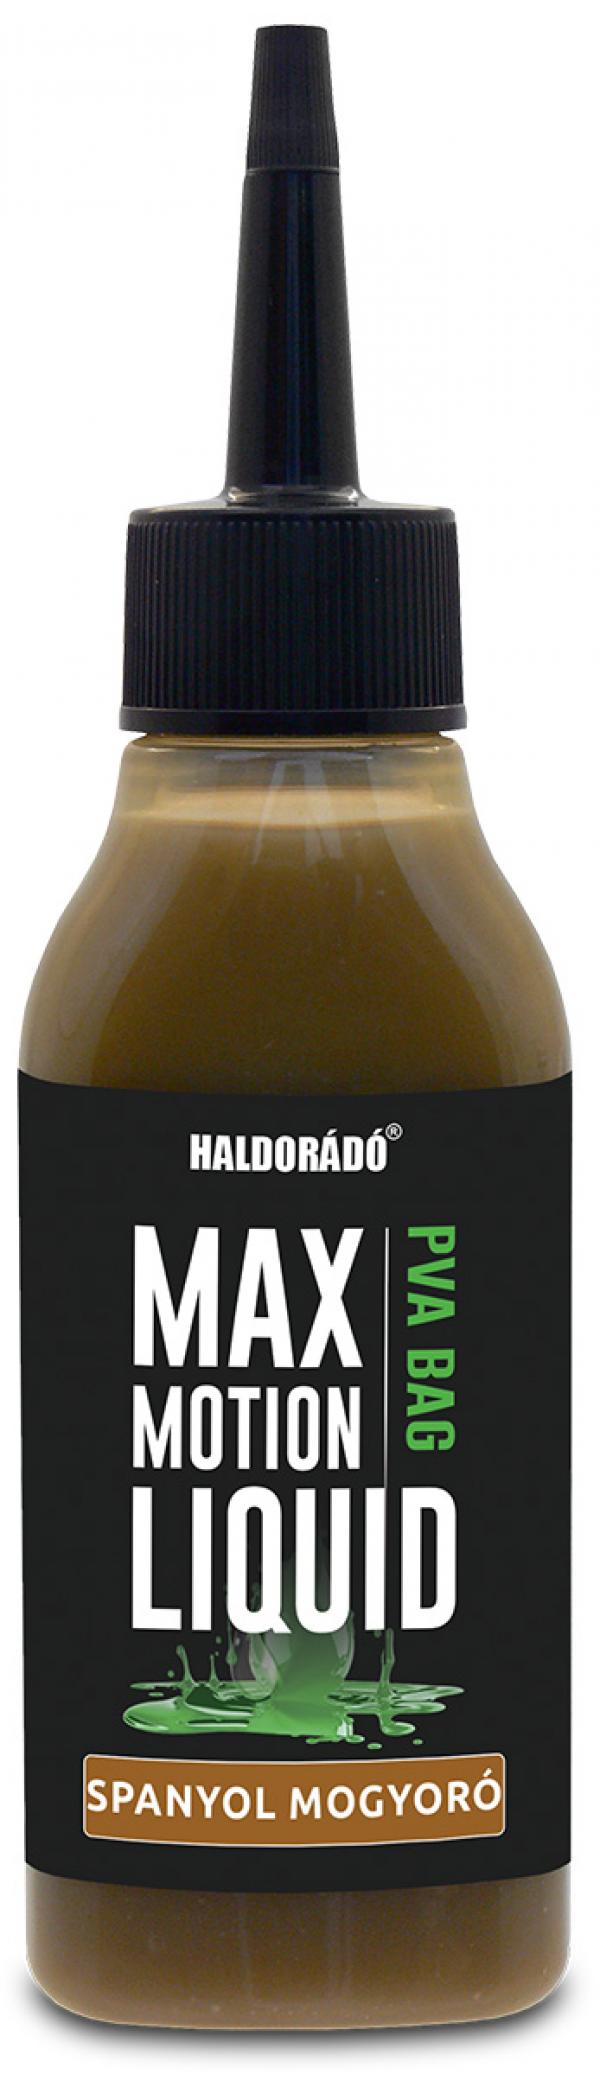 HALDORÁDÓ MAX MOTION PVA Bag Liquid - Spanyol Mogyoró